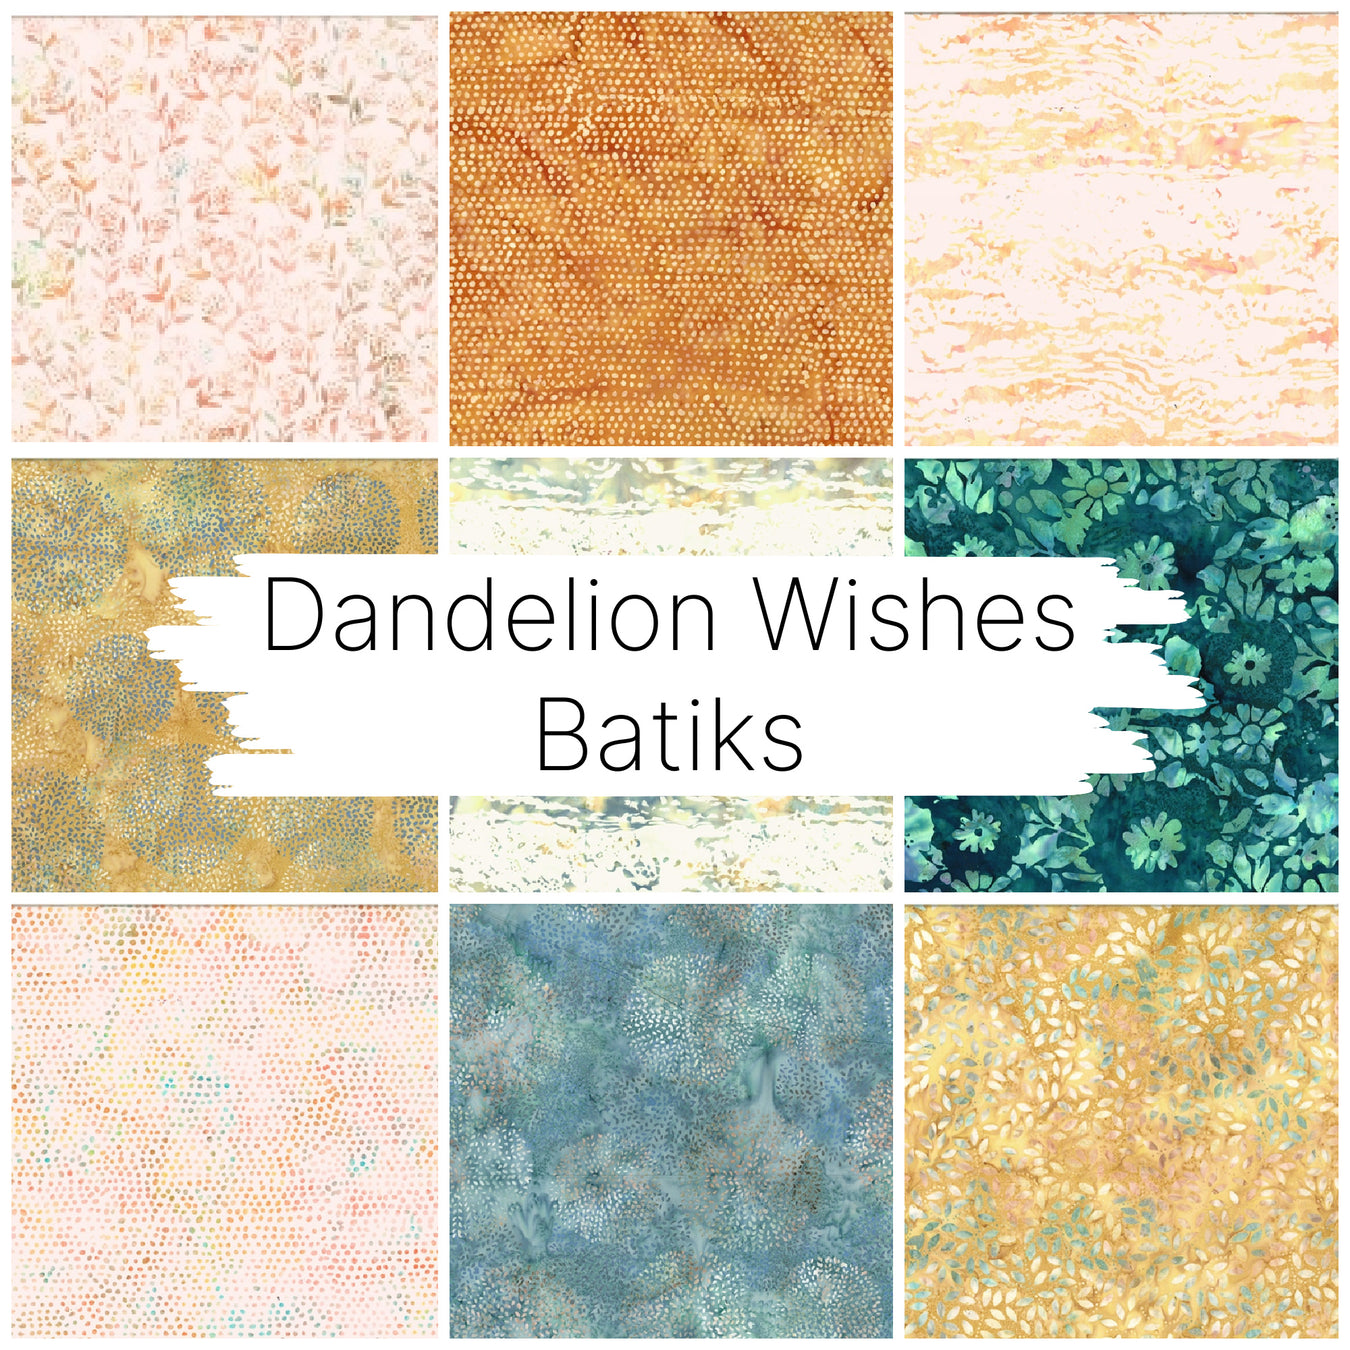 Dandelion Wishes Batiks